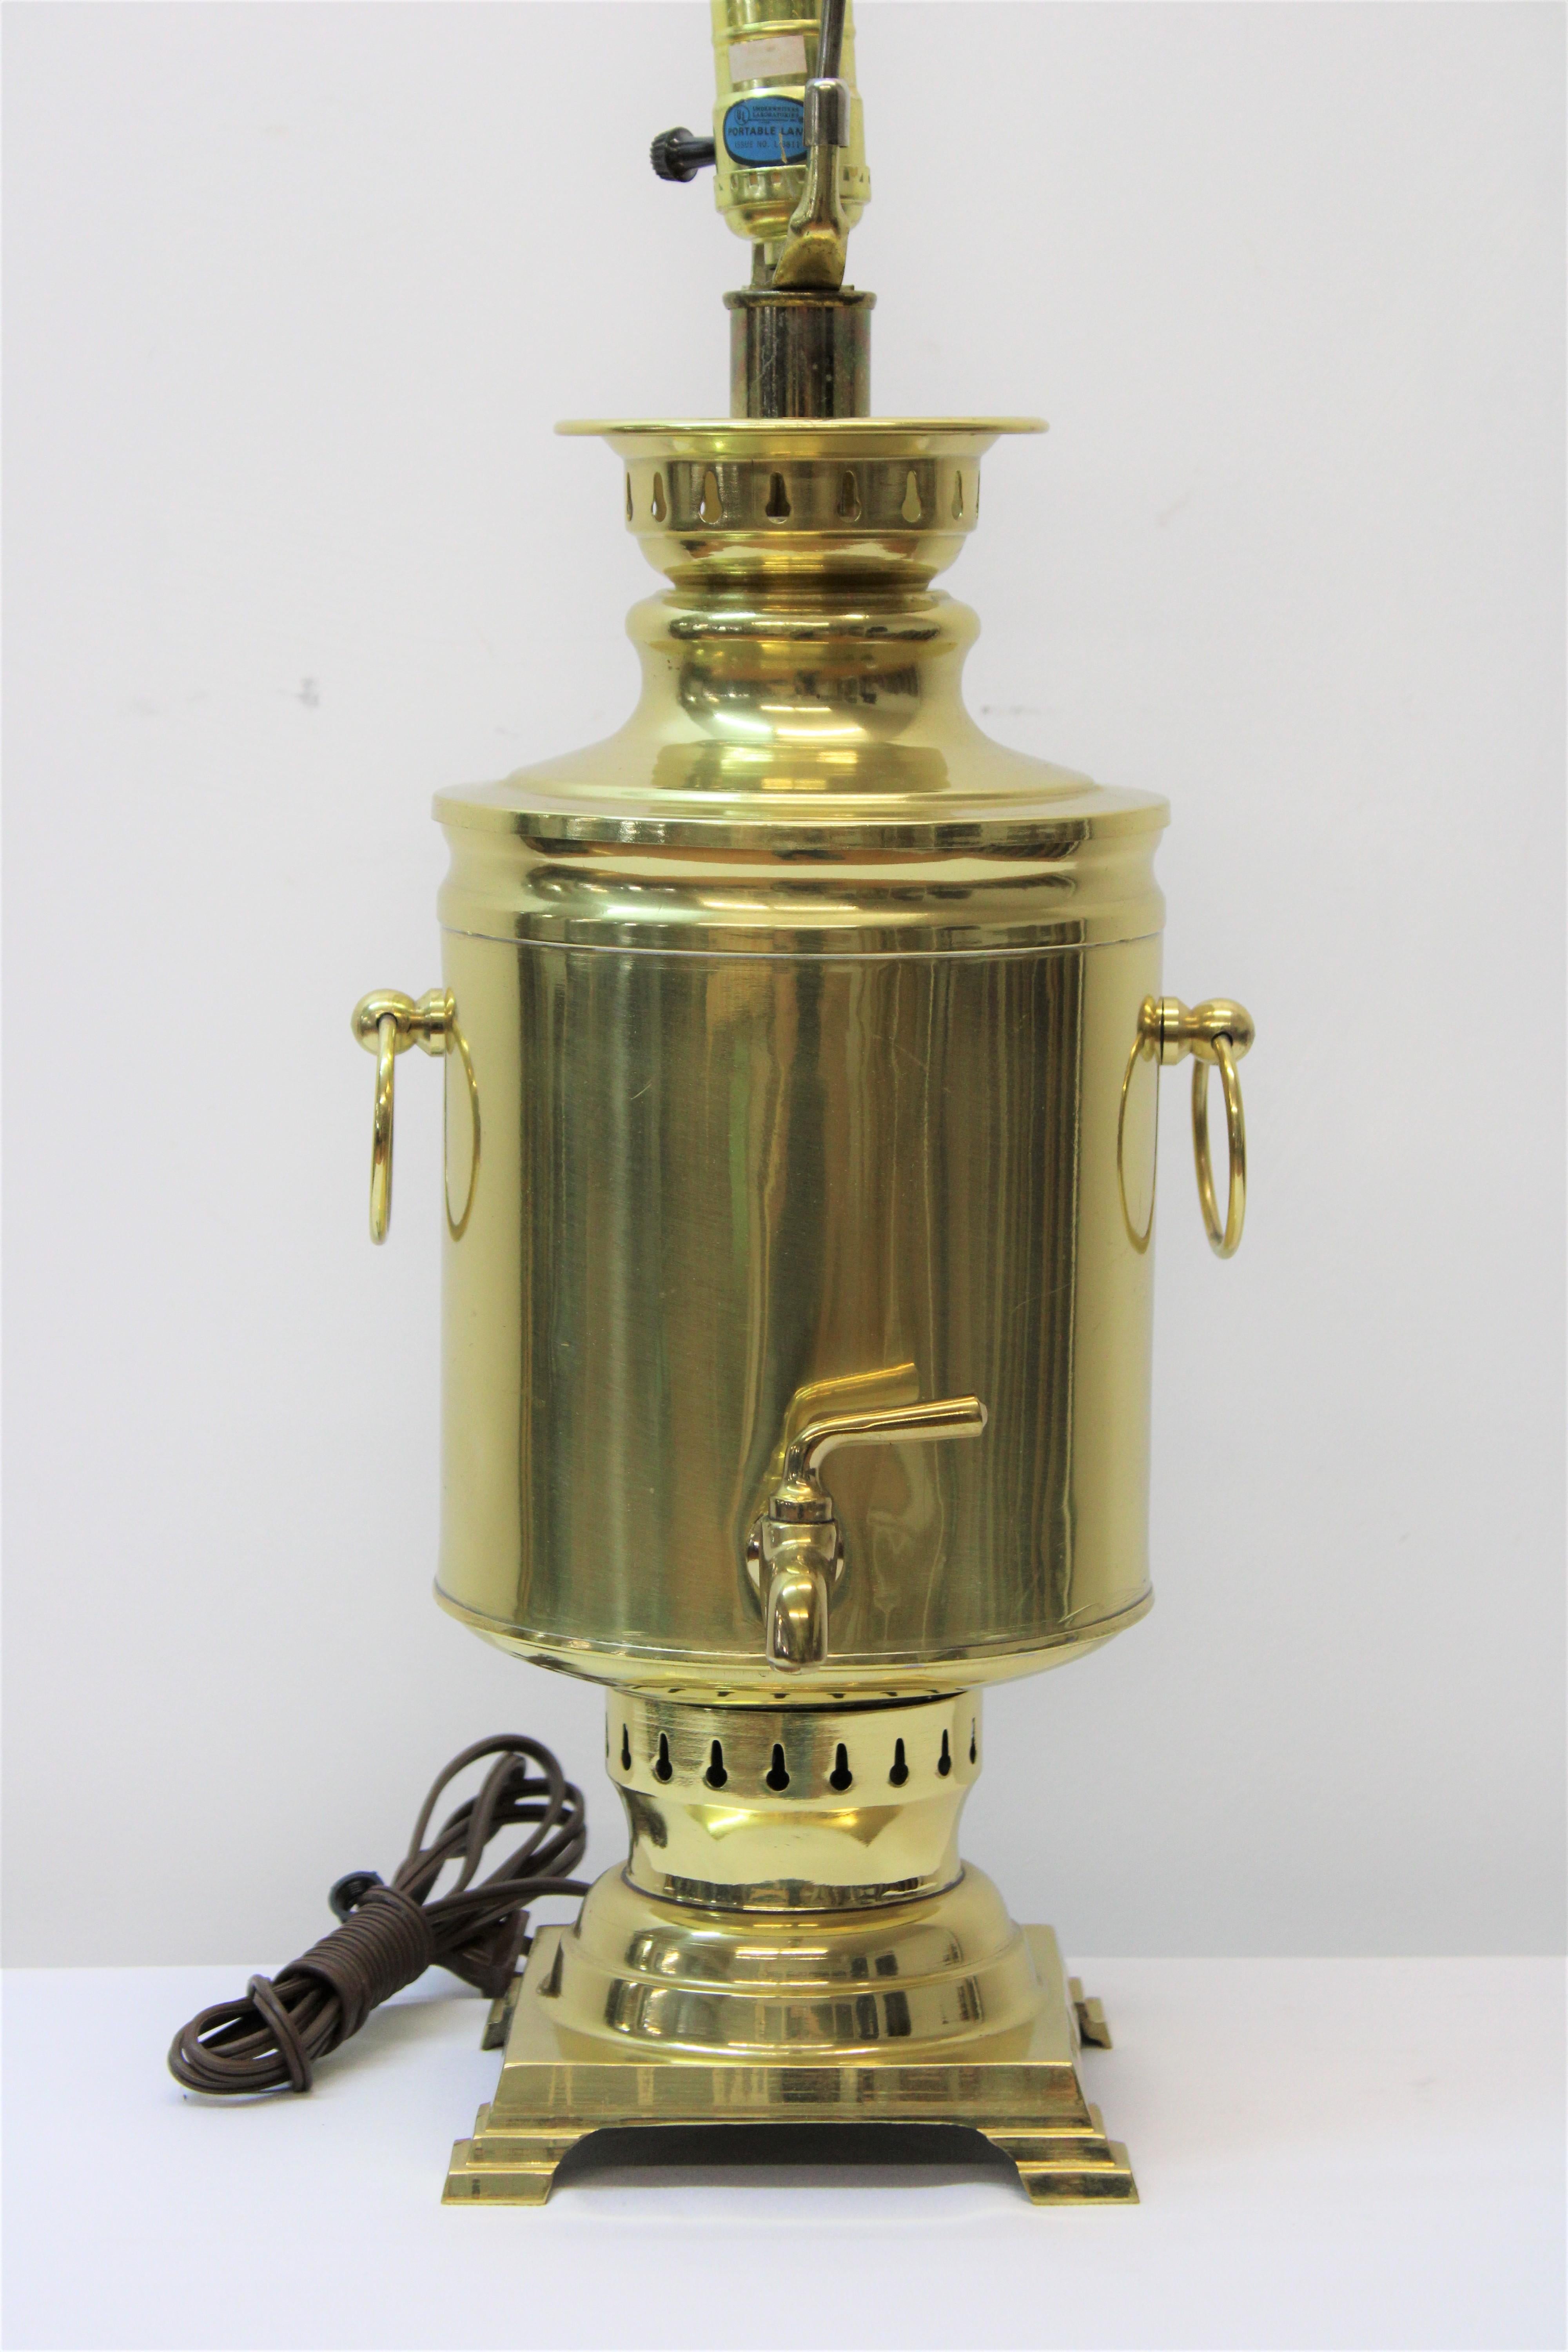 C. 20th century.

Brass samnovar converted table lamp.